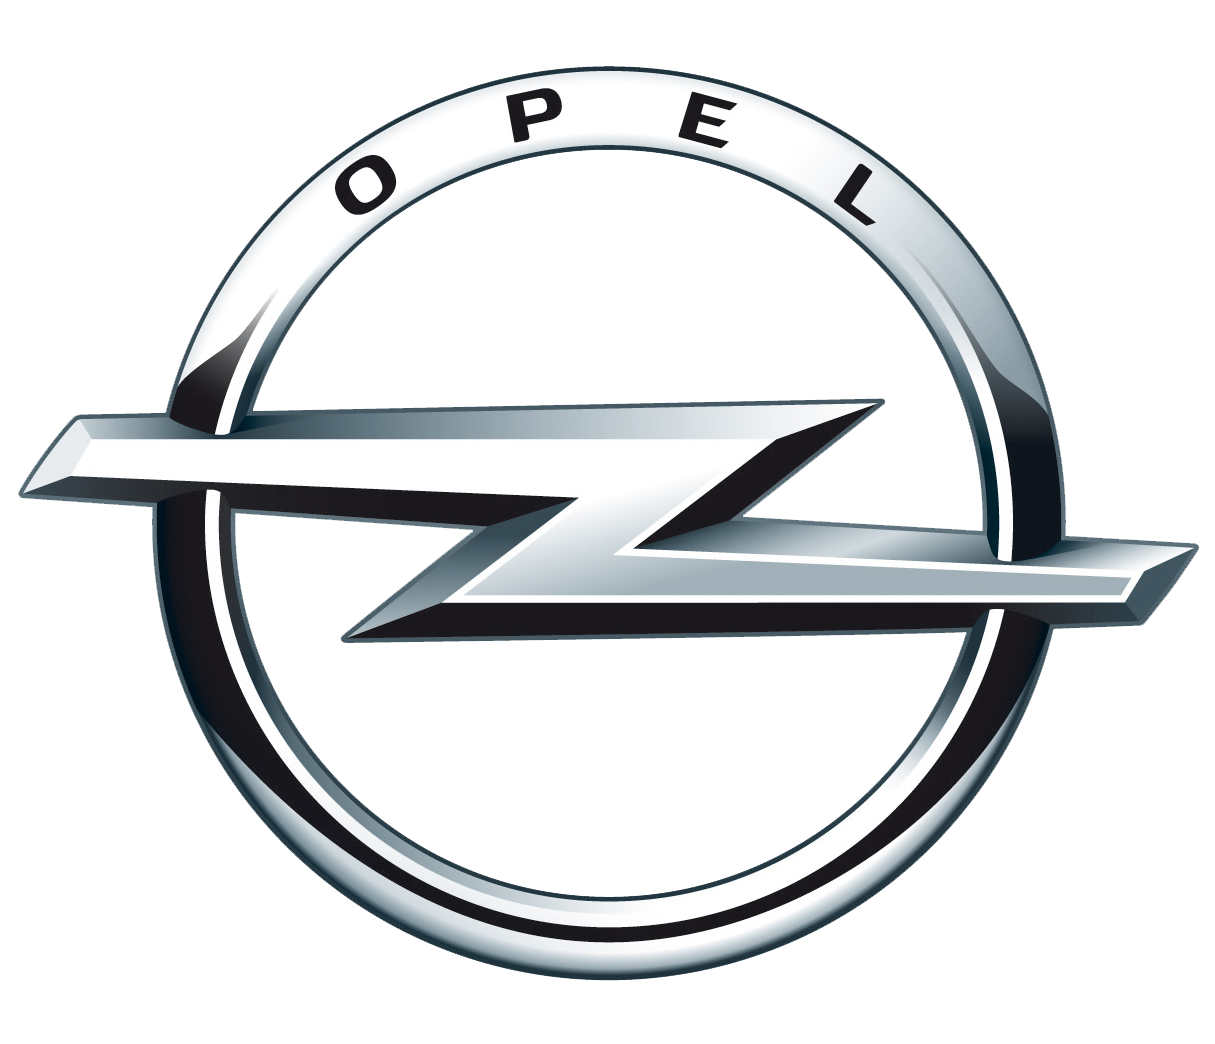 UPEL Logo photo - 1